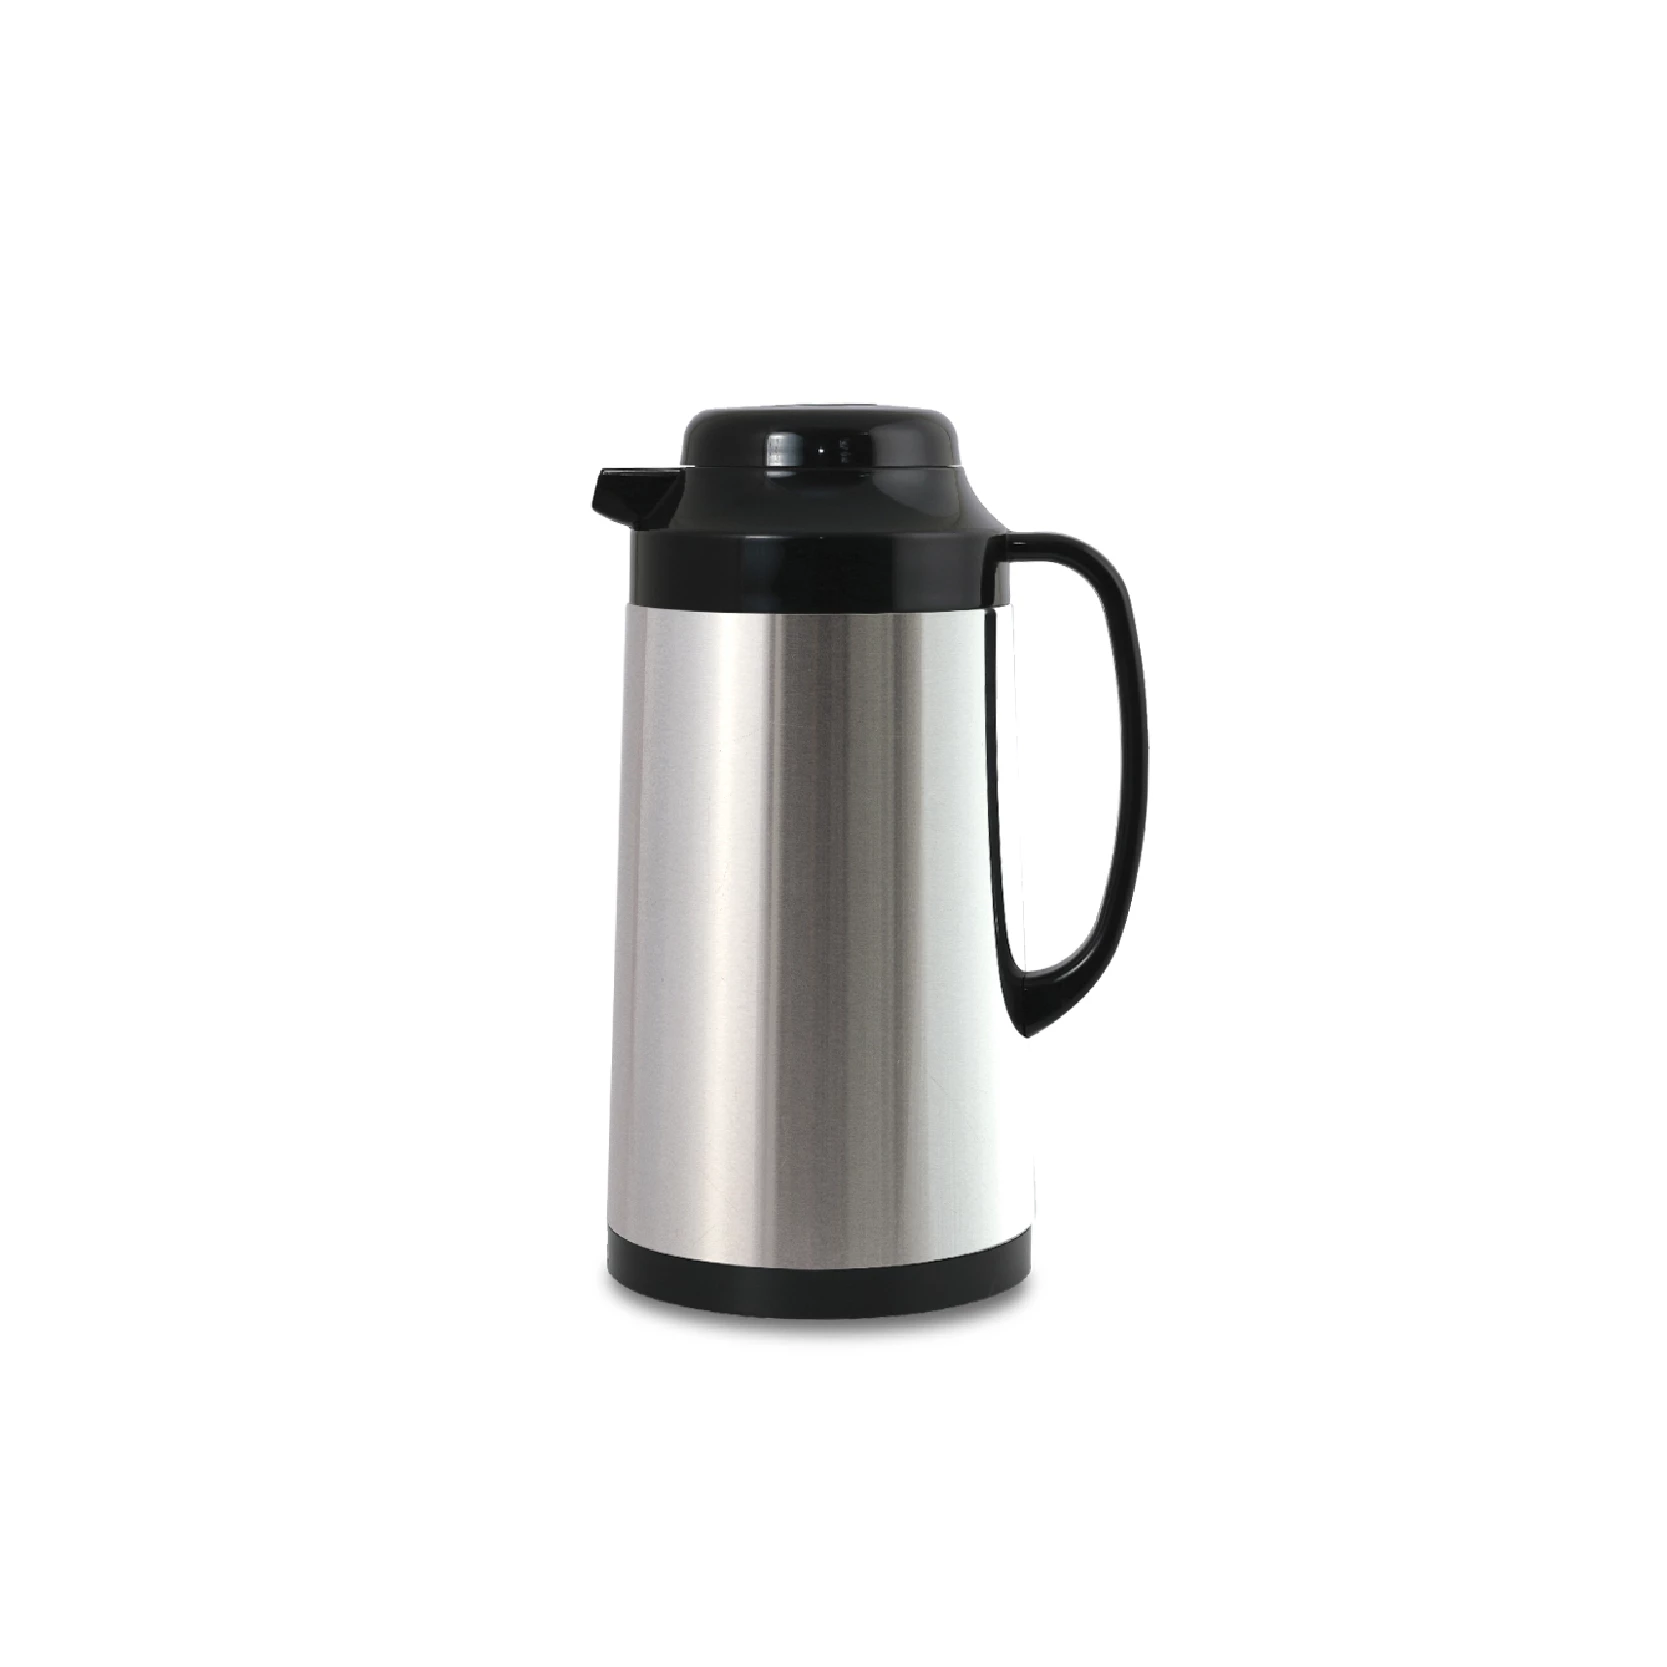 https://vacuumflask.rangdong.com.vn/static/Coffee-series-3/av2.jpg